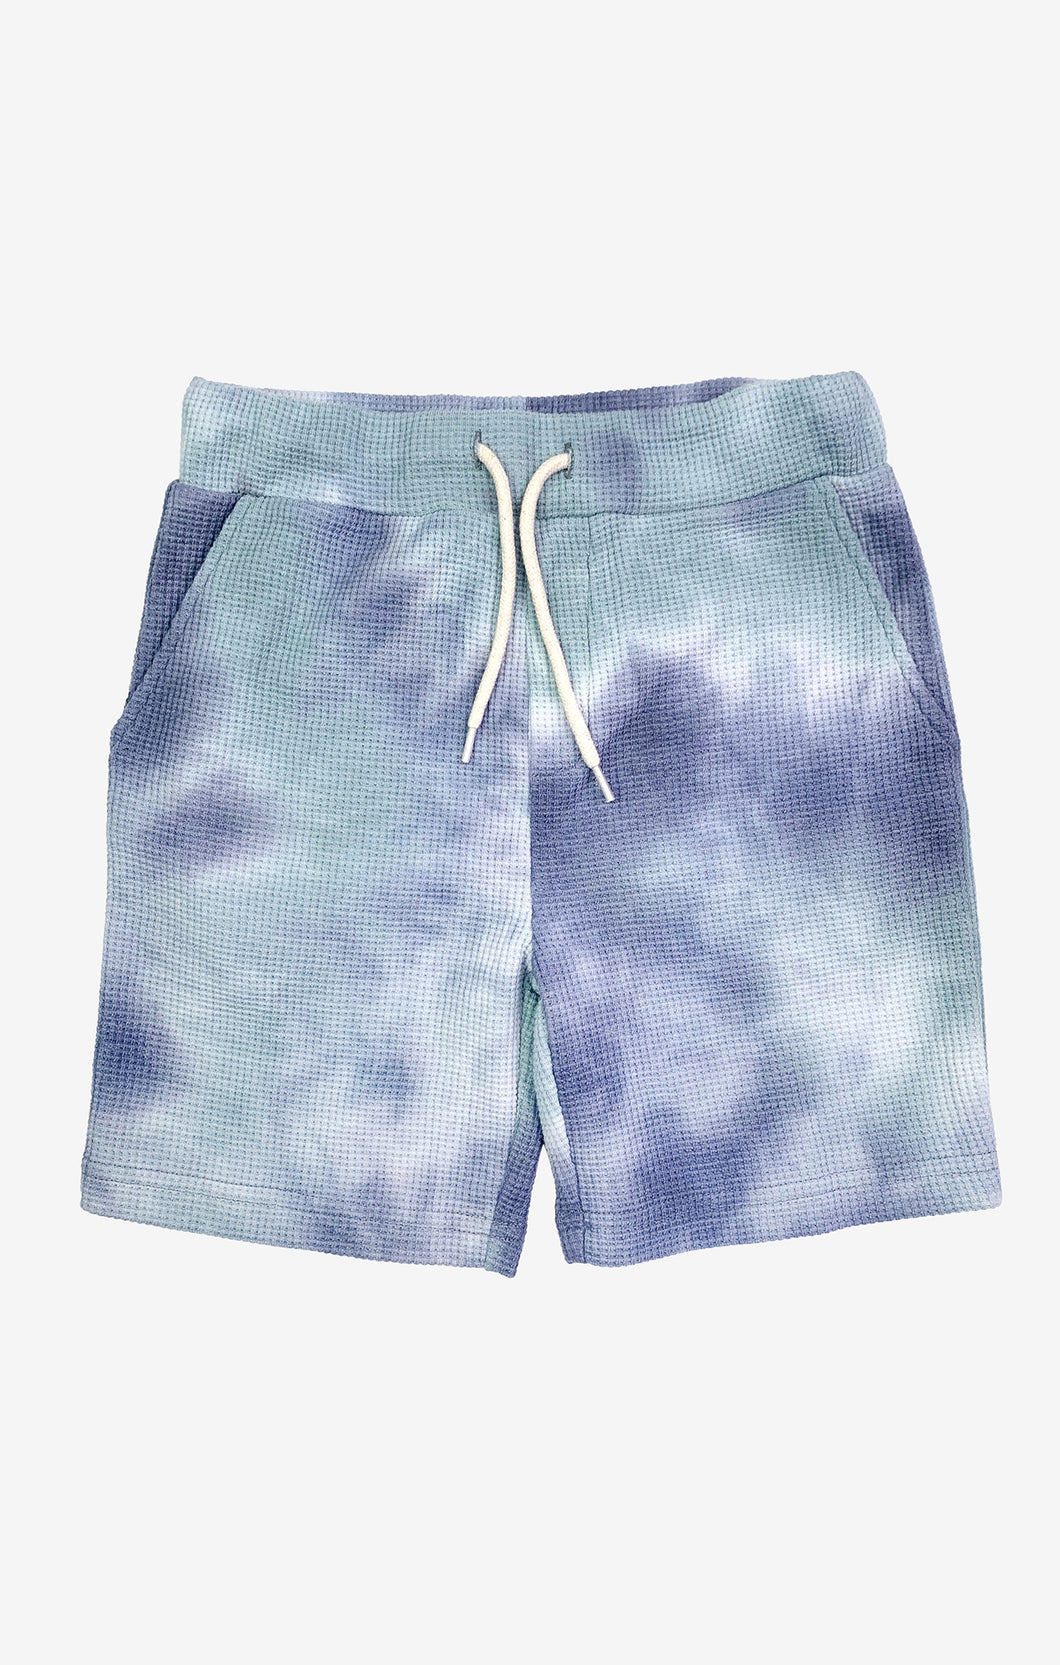 Resort Shorts- Seamfoam Tie Dye